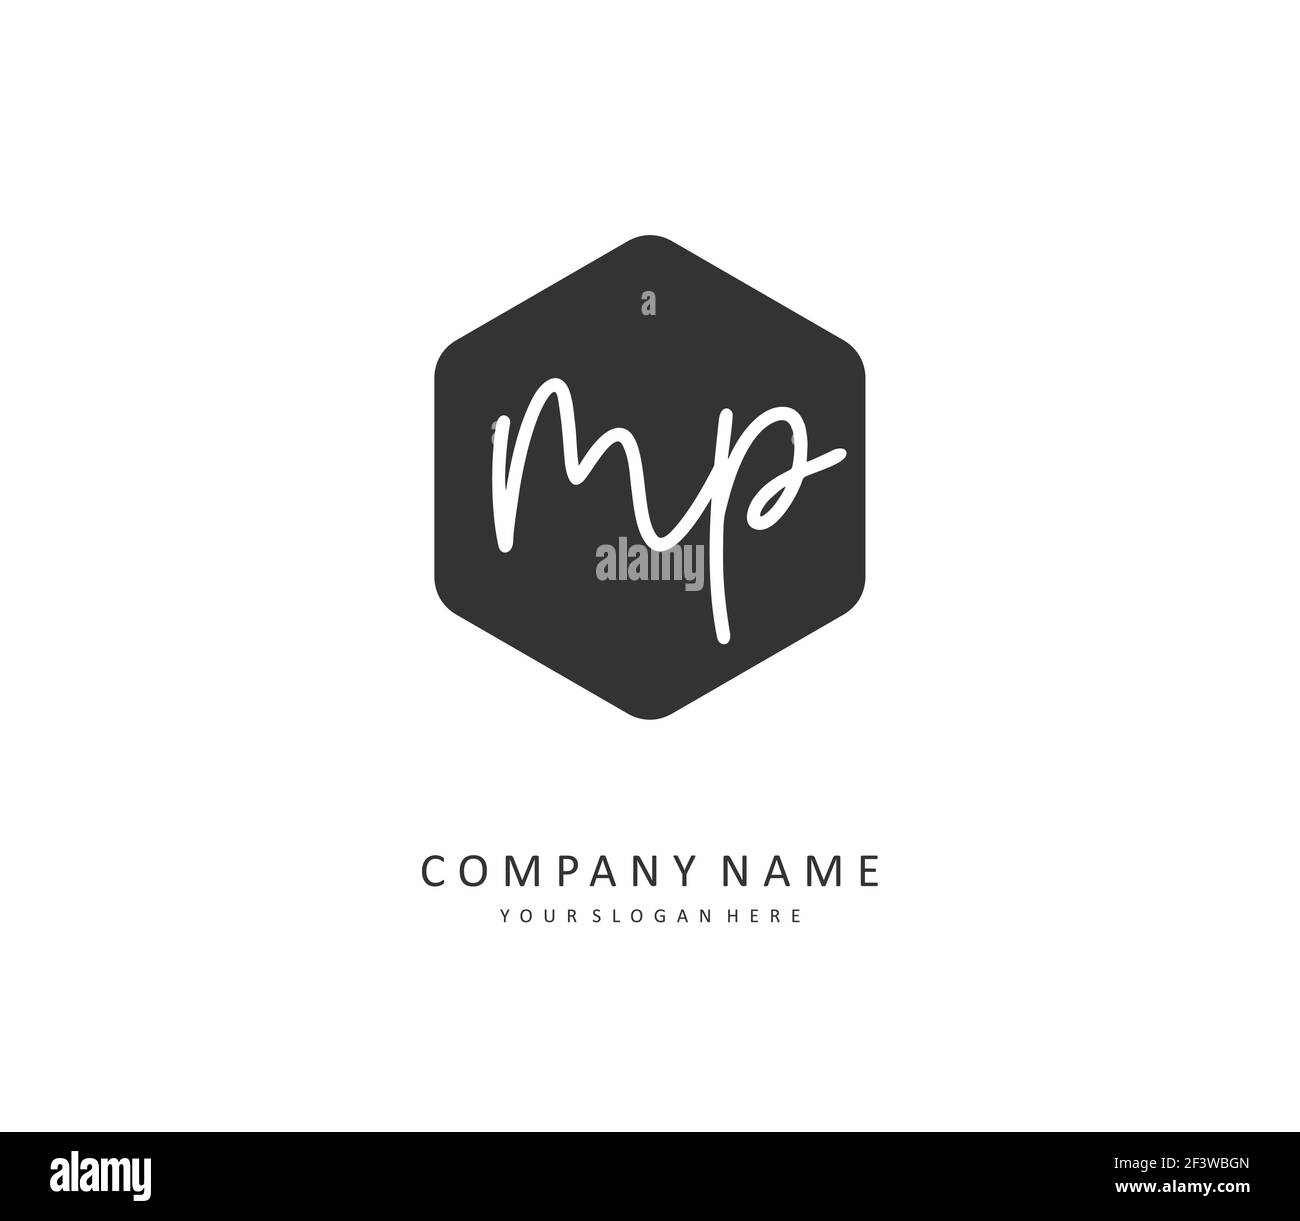 Minimal Innovative Initial M logo and MM logo. Letter PM LOGO AND MP LOGO  creative elegant Monogram. PM MP Premium Business log…